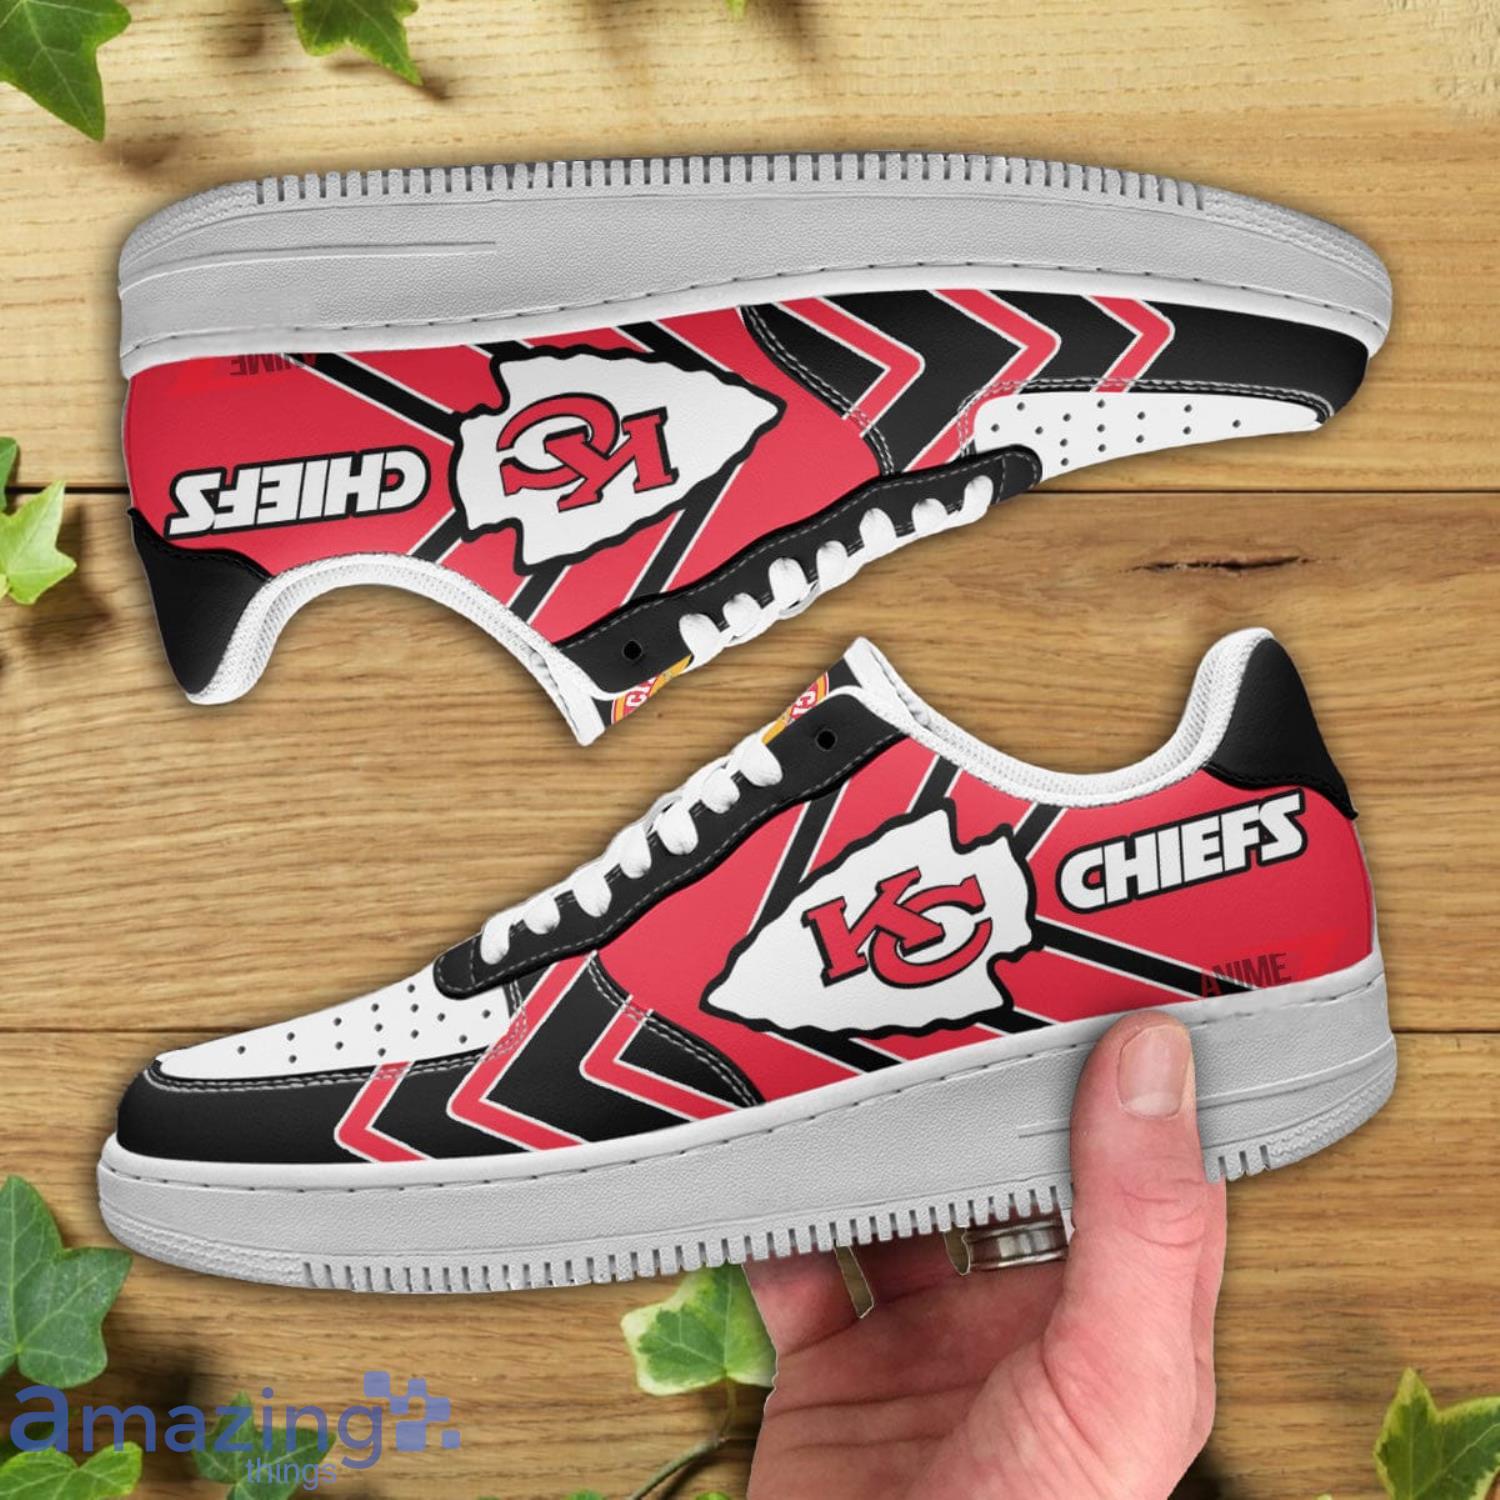 Kansas City Chiefs CUSTOM Nike Air Force Shoes 